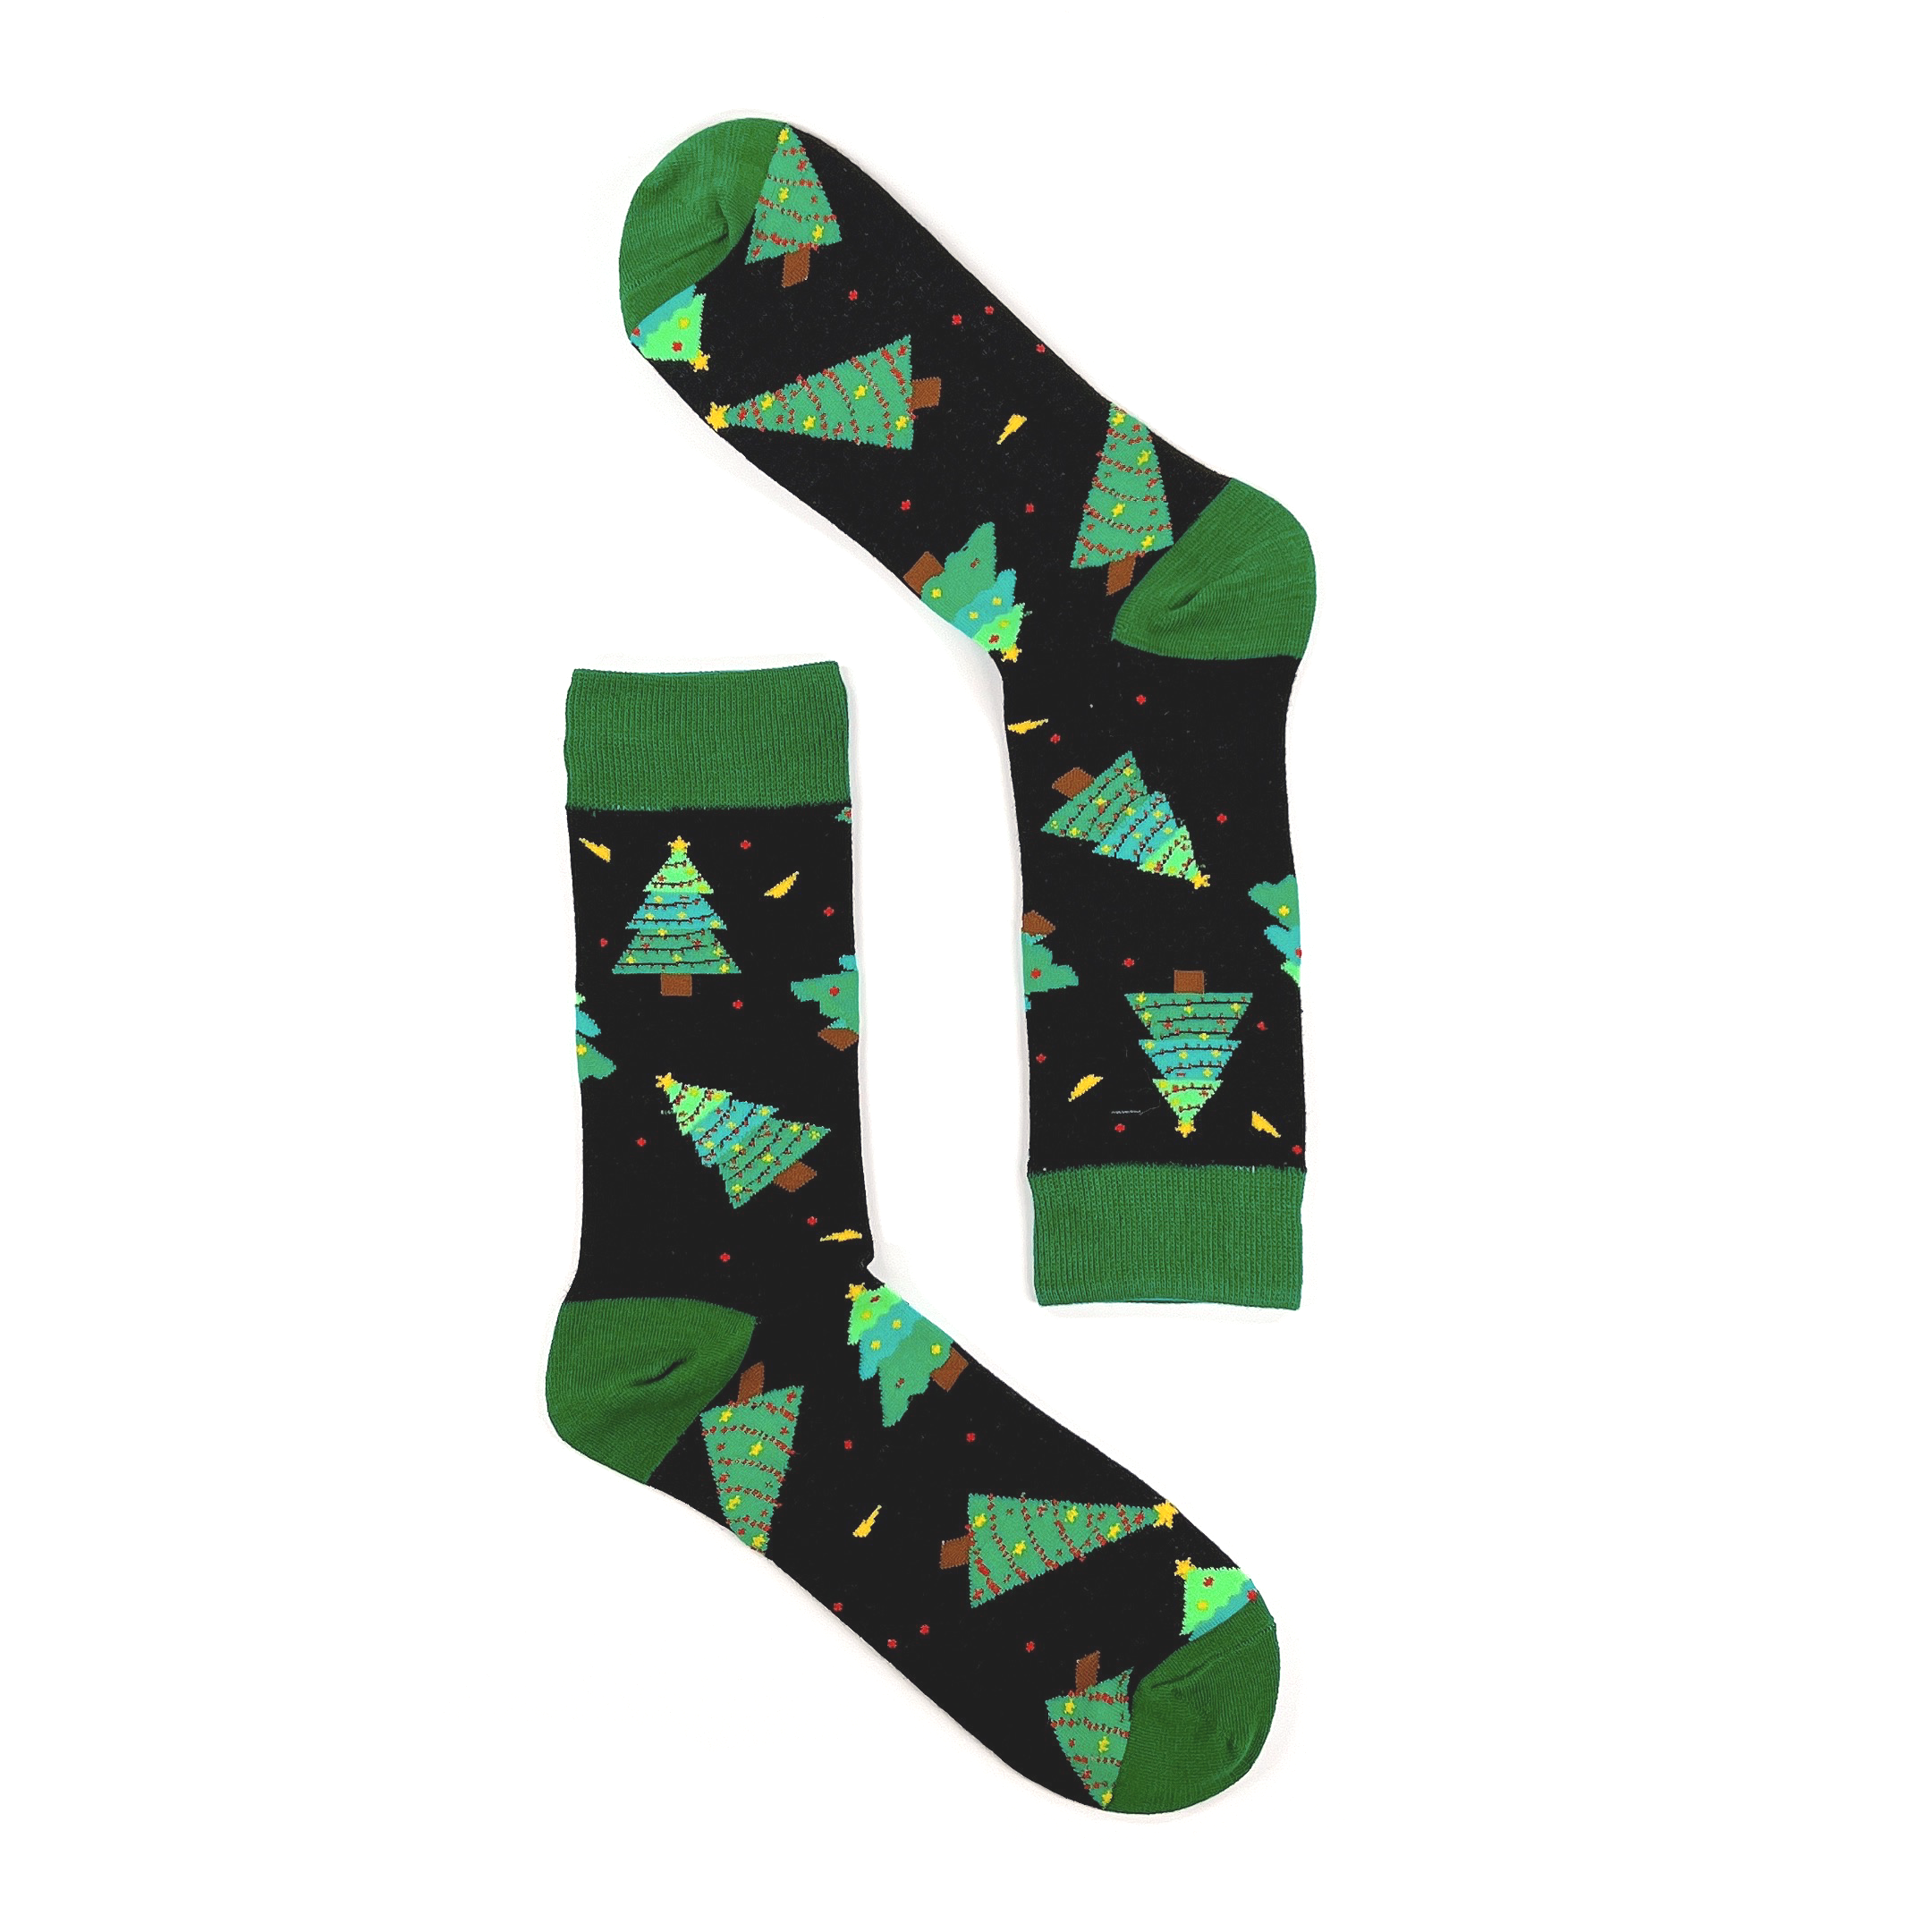 Christmas socks nz